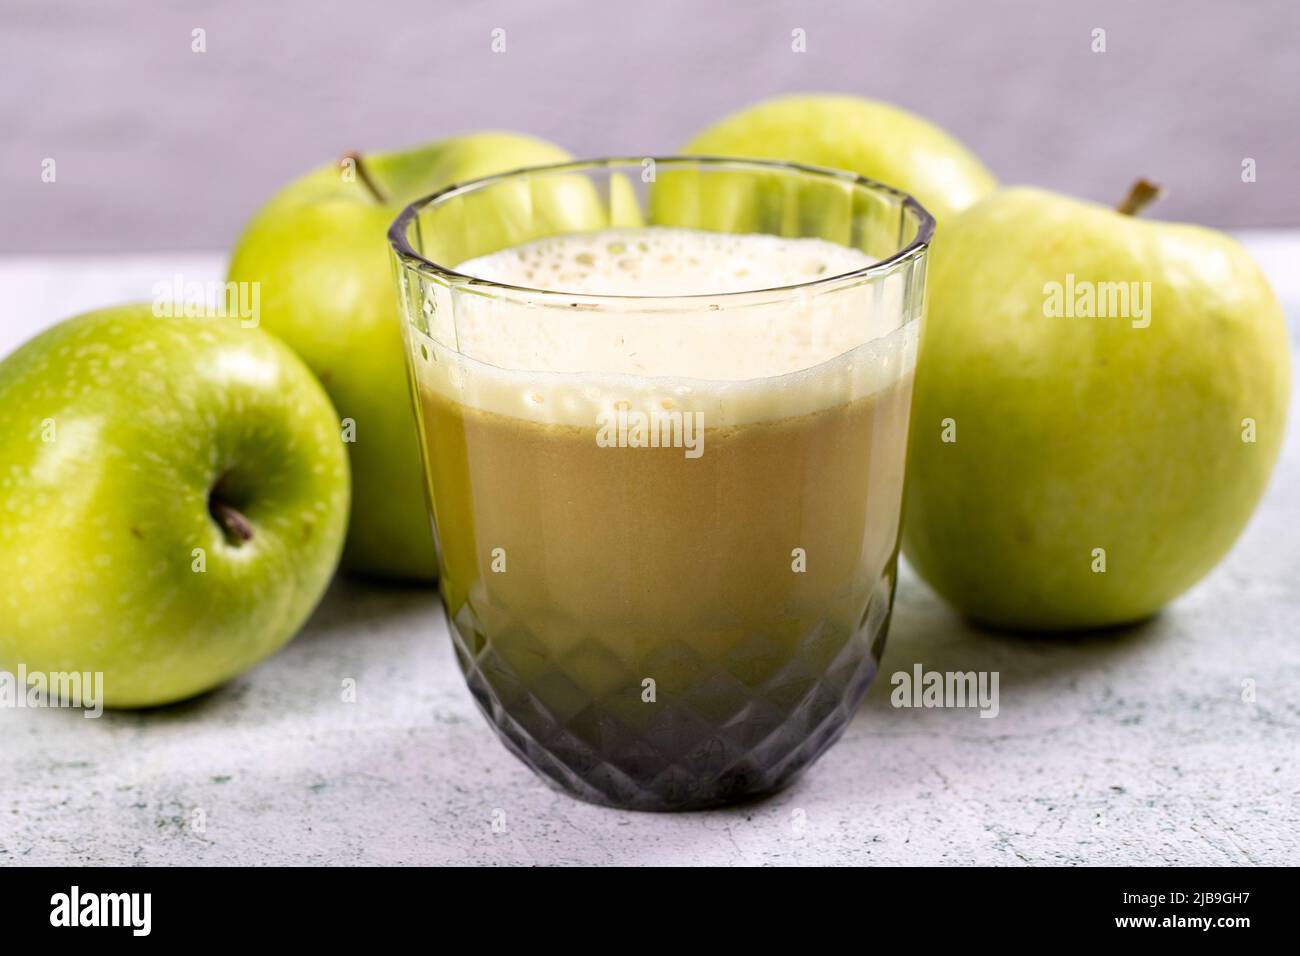 1 ounce fresh squeezed apple juice calories